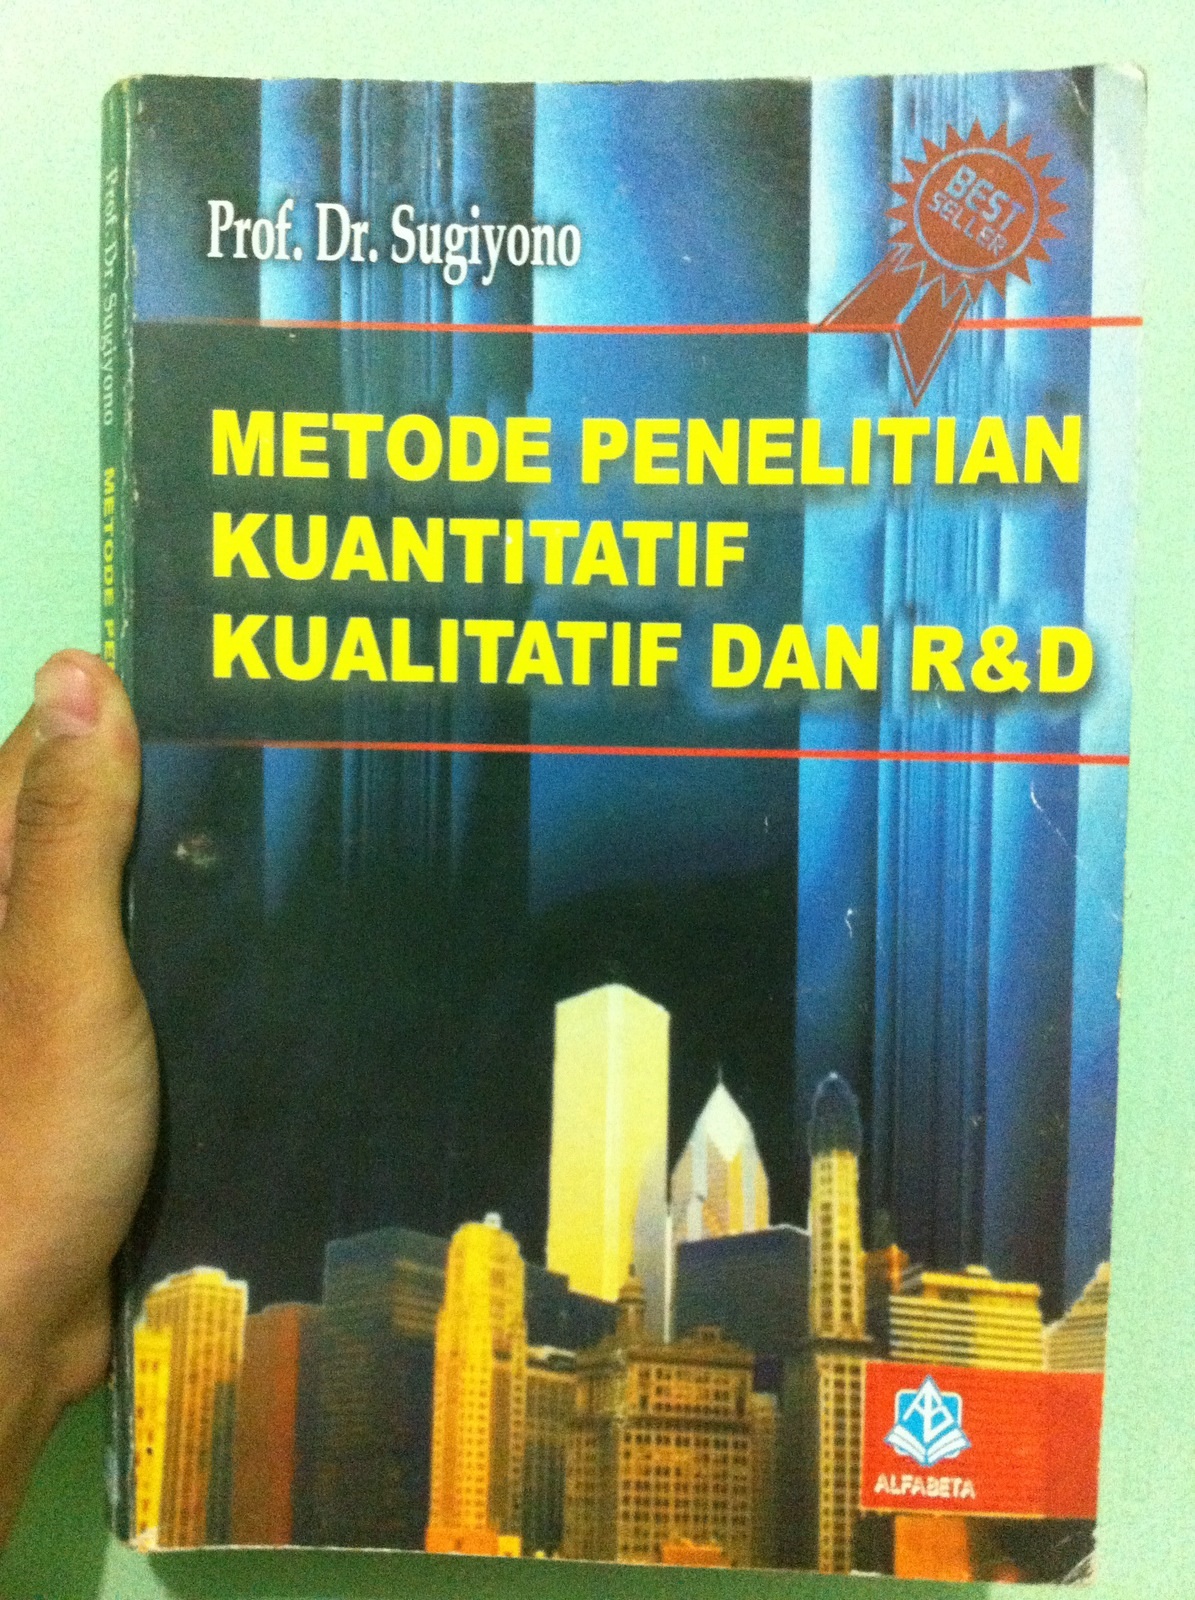 Buku Metode Penelitian Sugiyono 2013